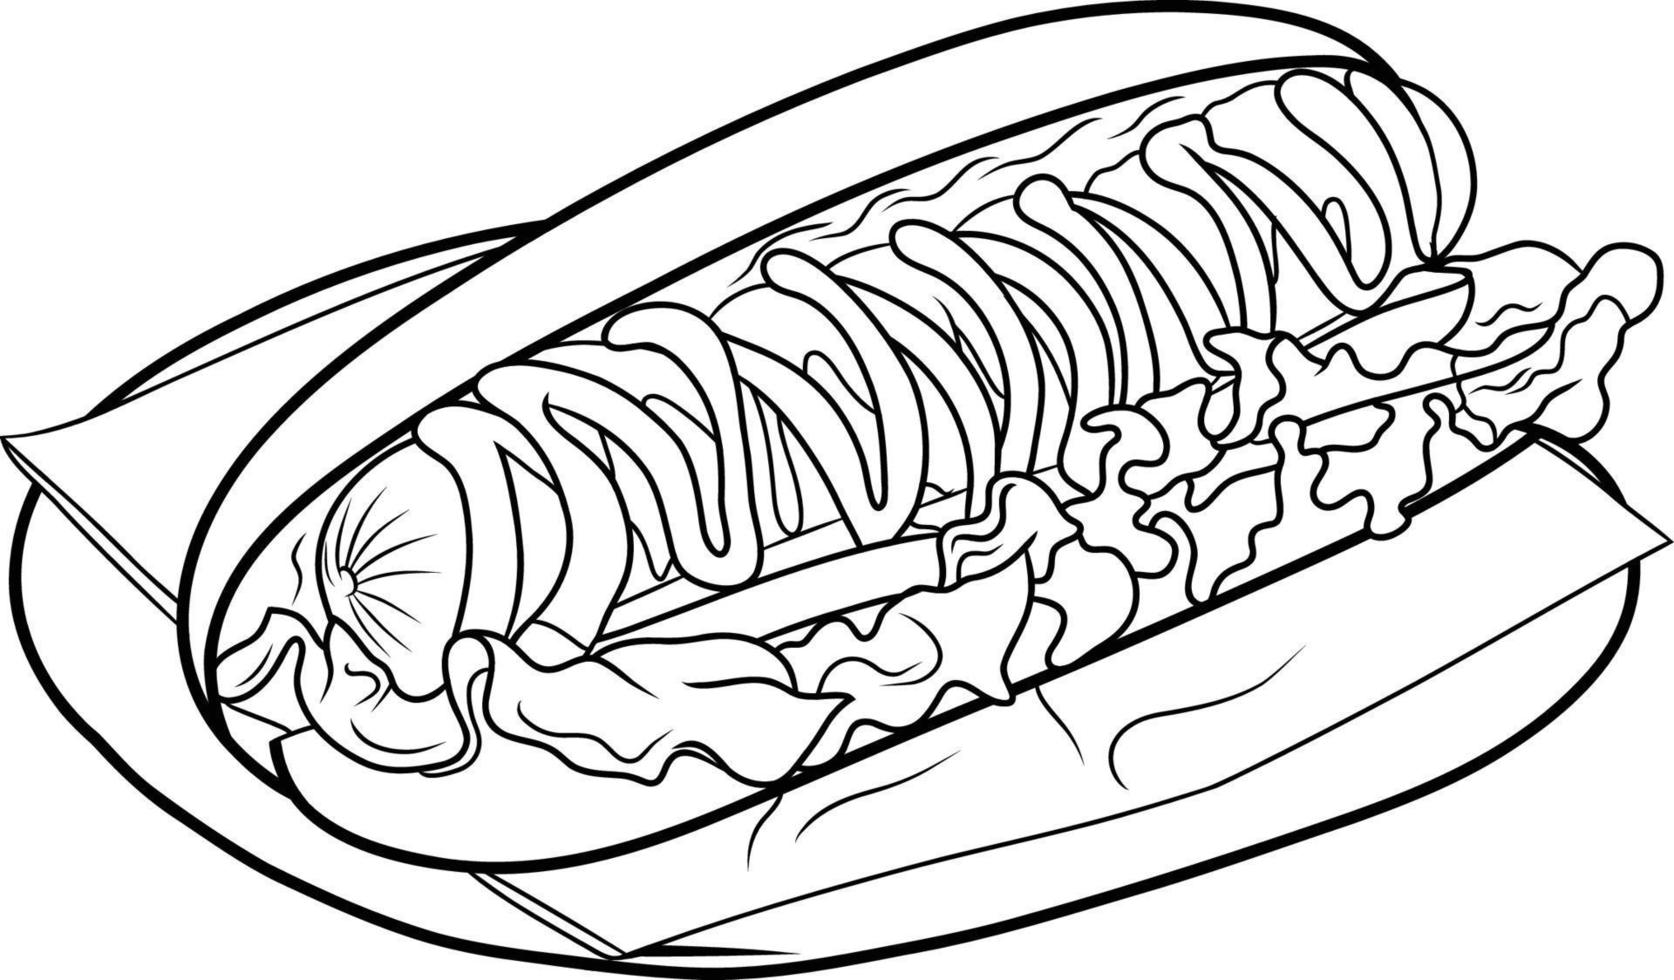 Fast Food Hot Dog Drawing Cartoon Isolated vector